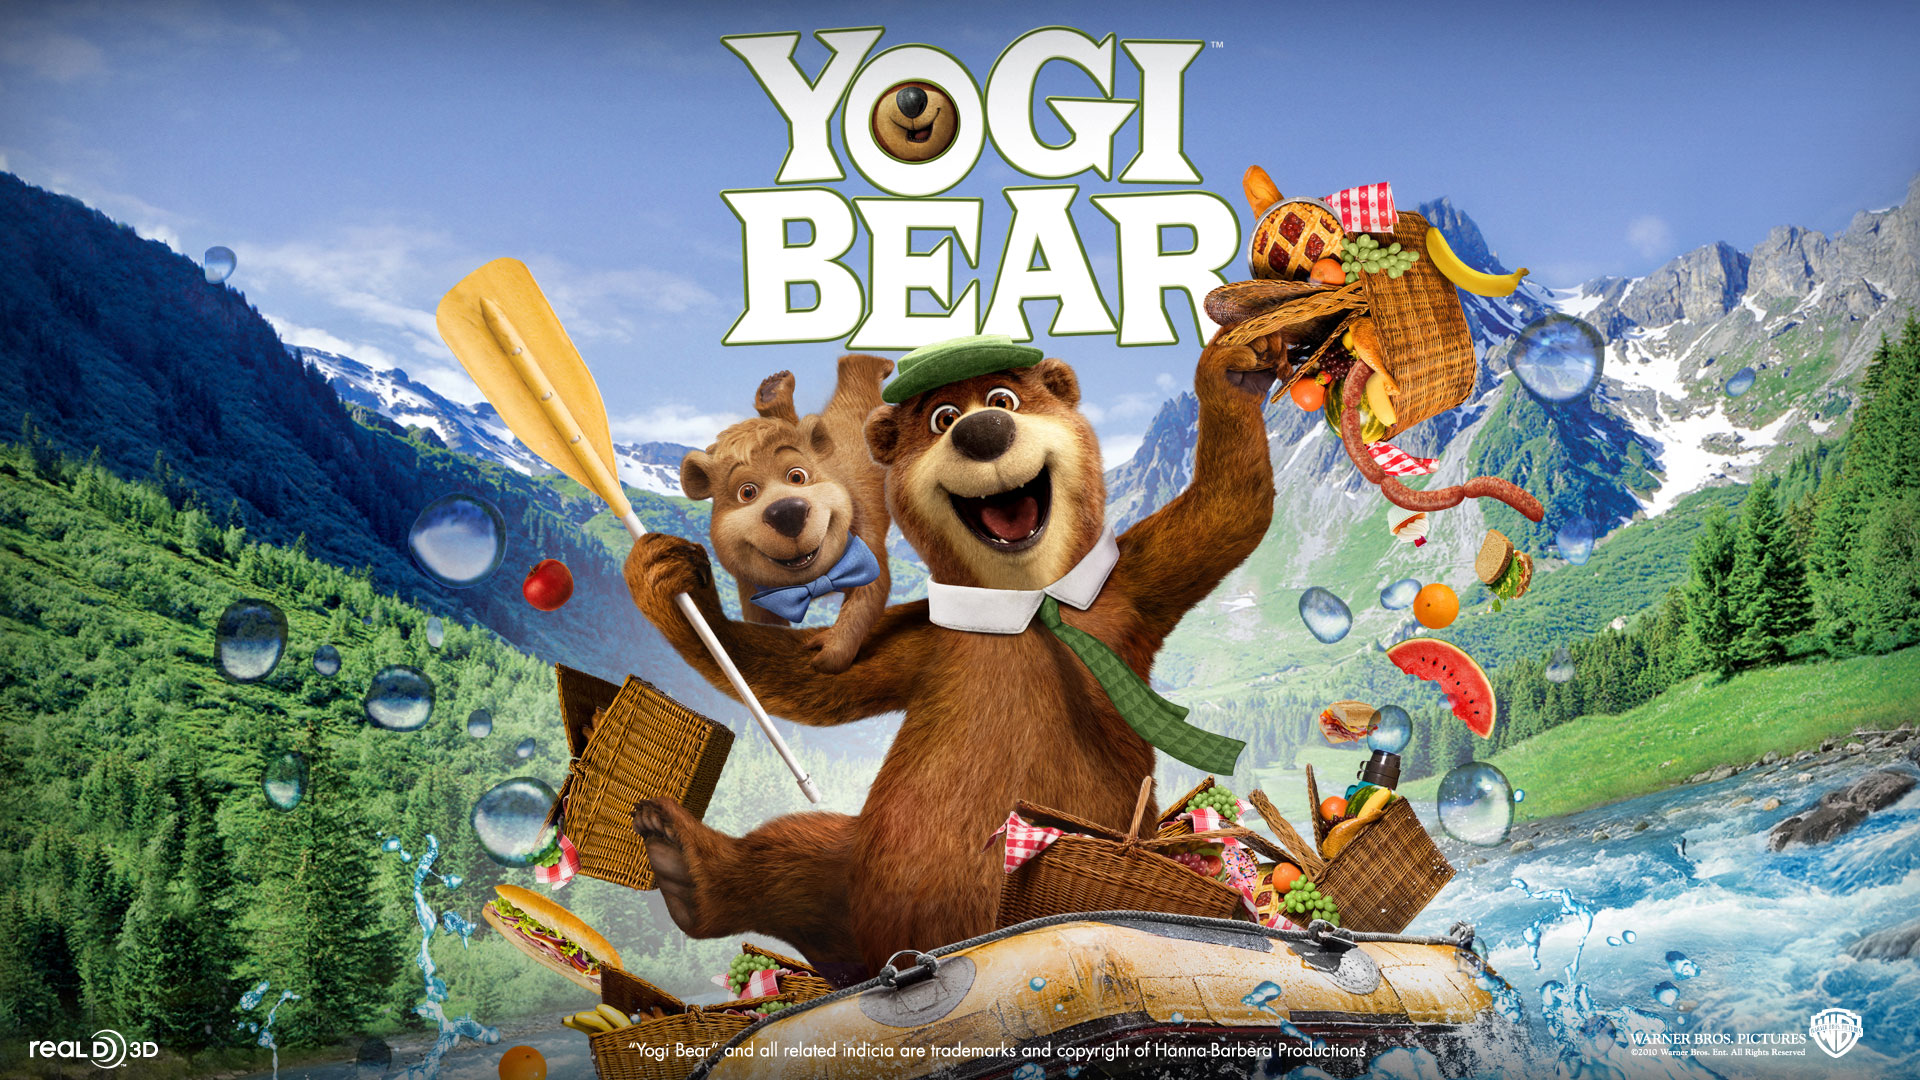 Yogi bear